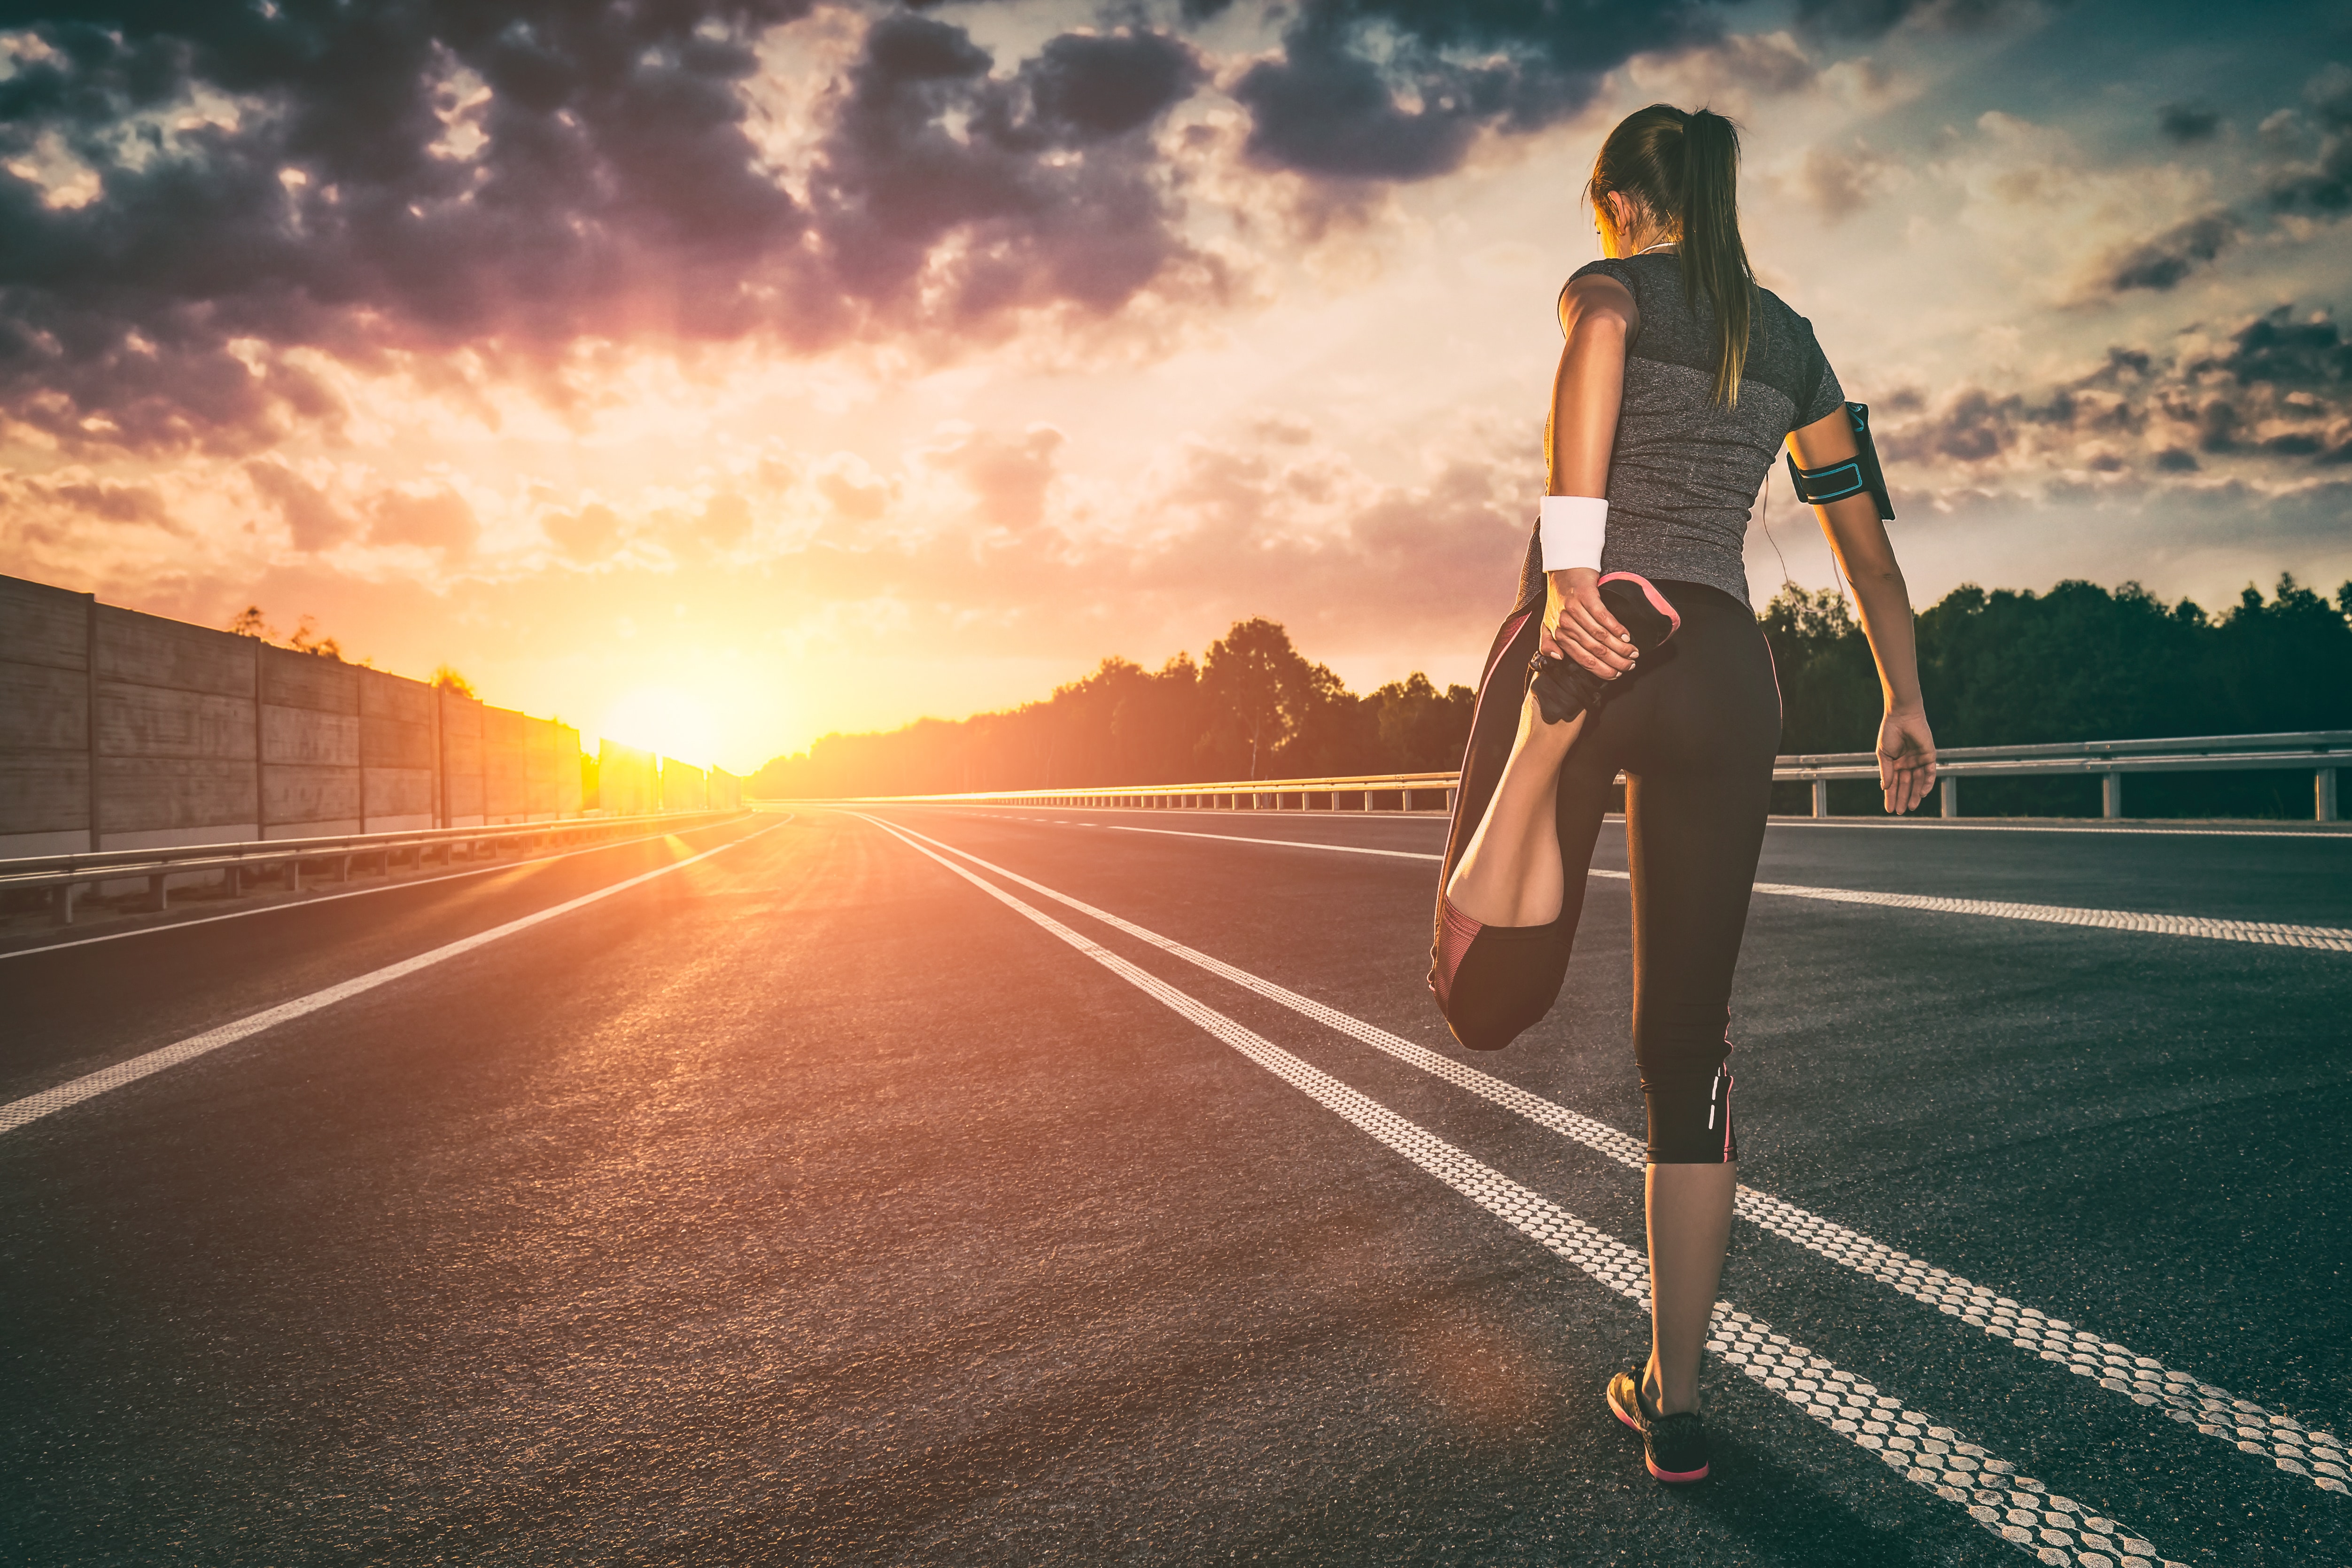 stretching run runner road jogging clothes flare sunset street fitness cross sunbeam success running sportswear